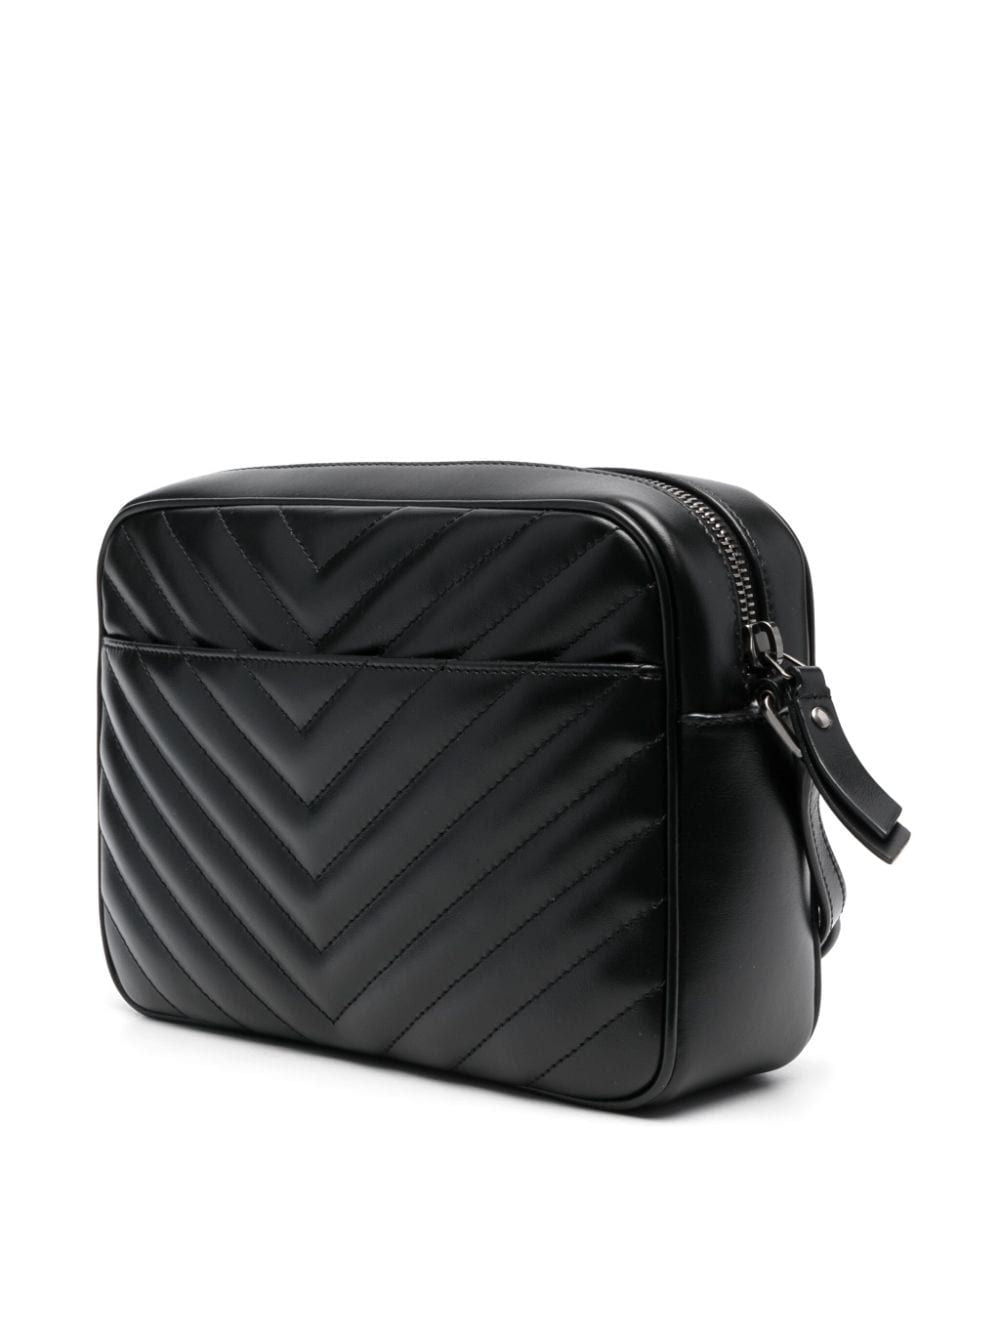 Túi xách đeo vai Saint Laurent Premier Lou Quilted màu đen logo YSL